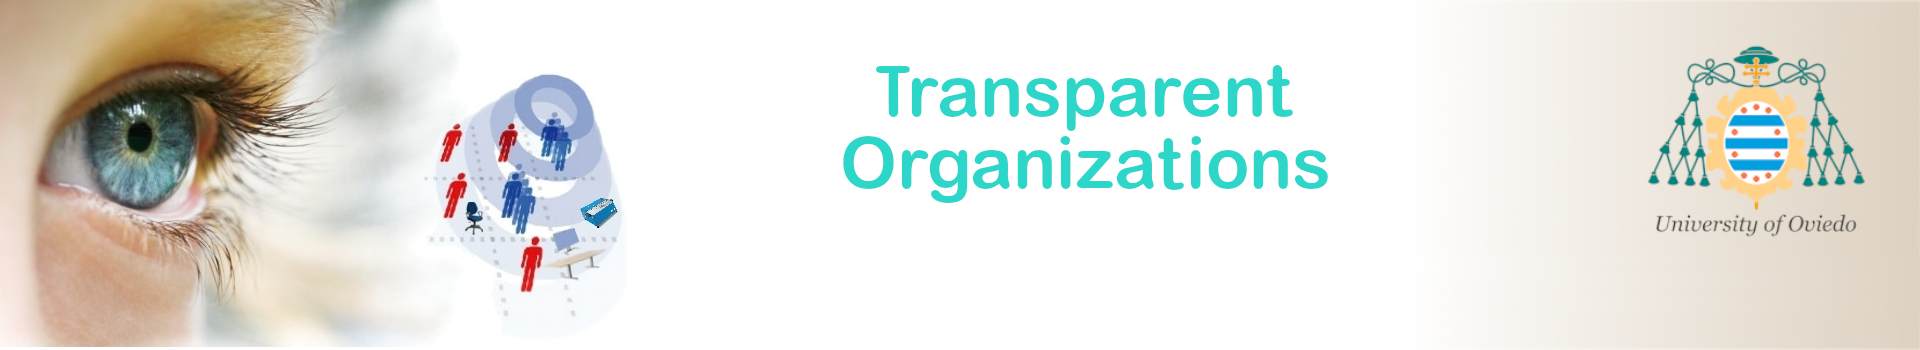 Transparent organizations